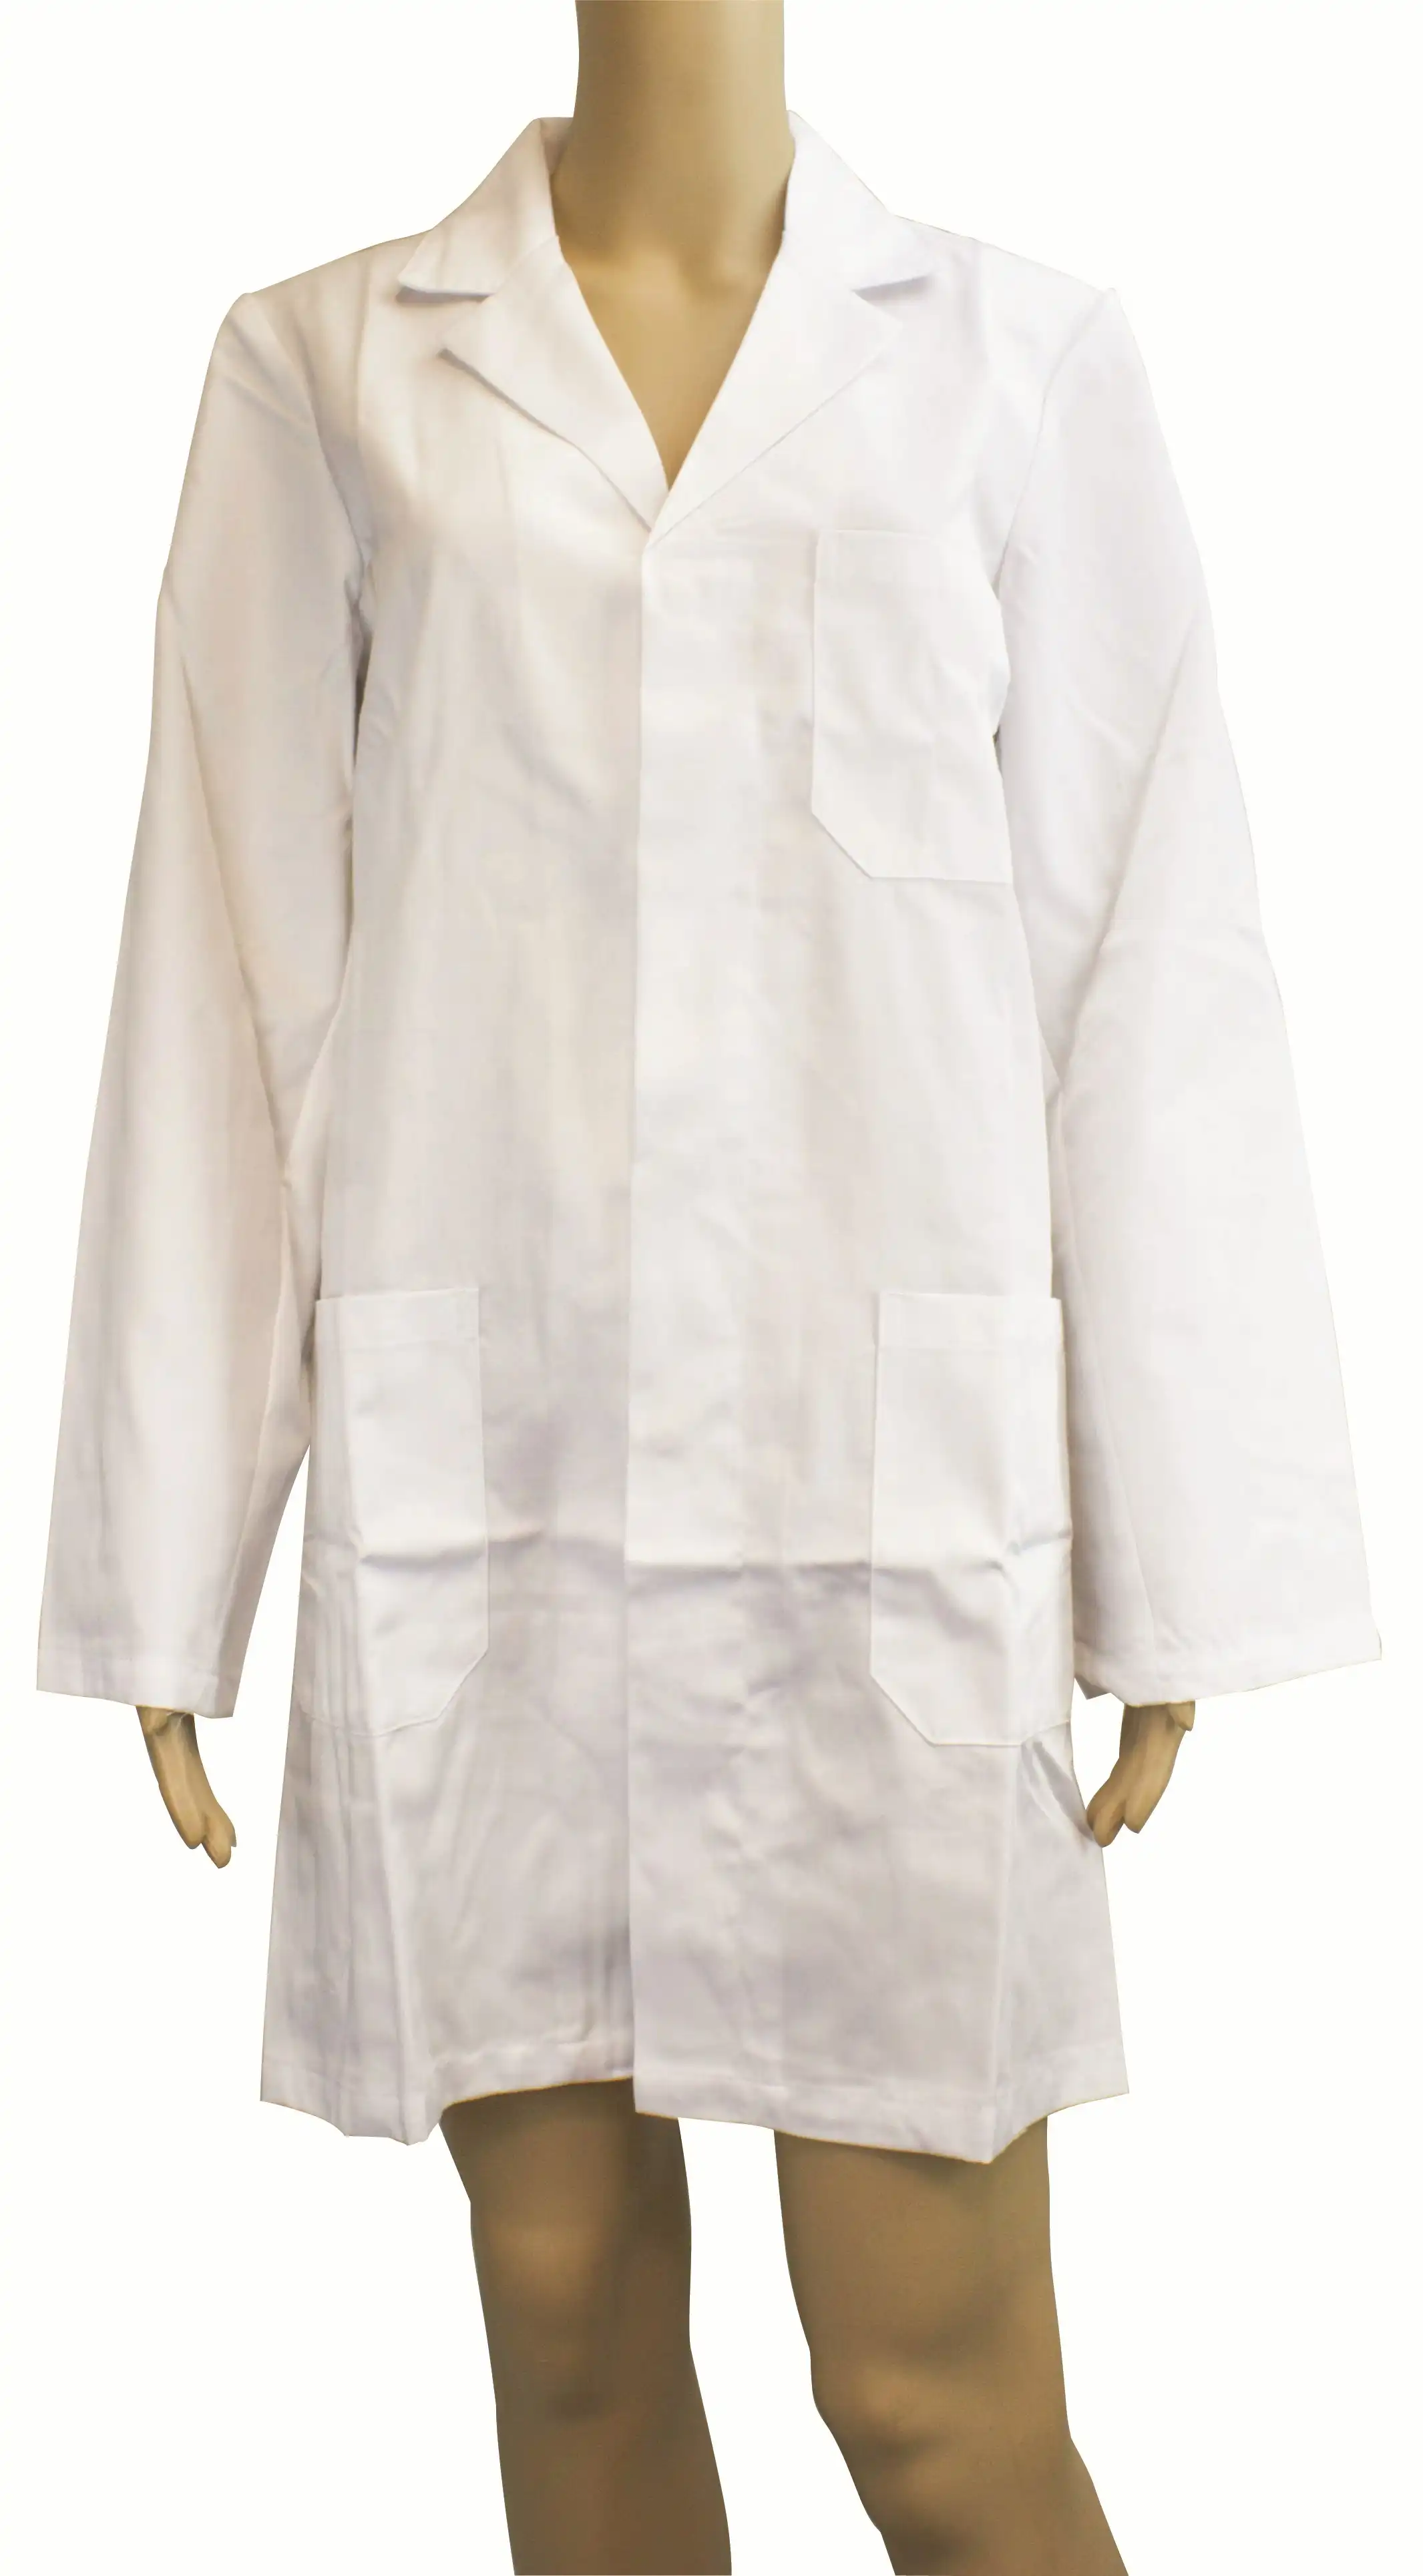 Livingstone Laboratory Coat with Press Stud Fastenings Medium (Male 112, Female 22) White